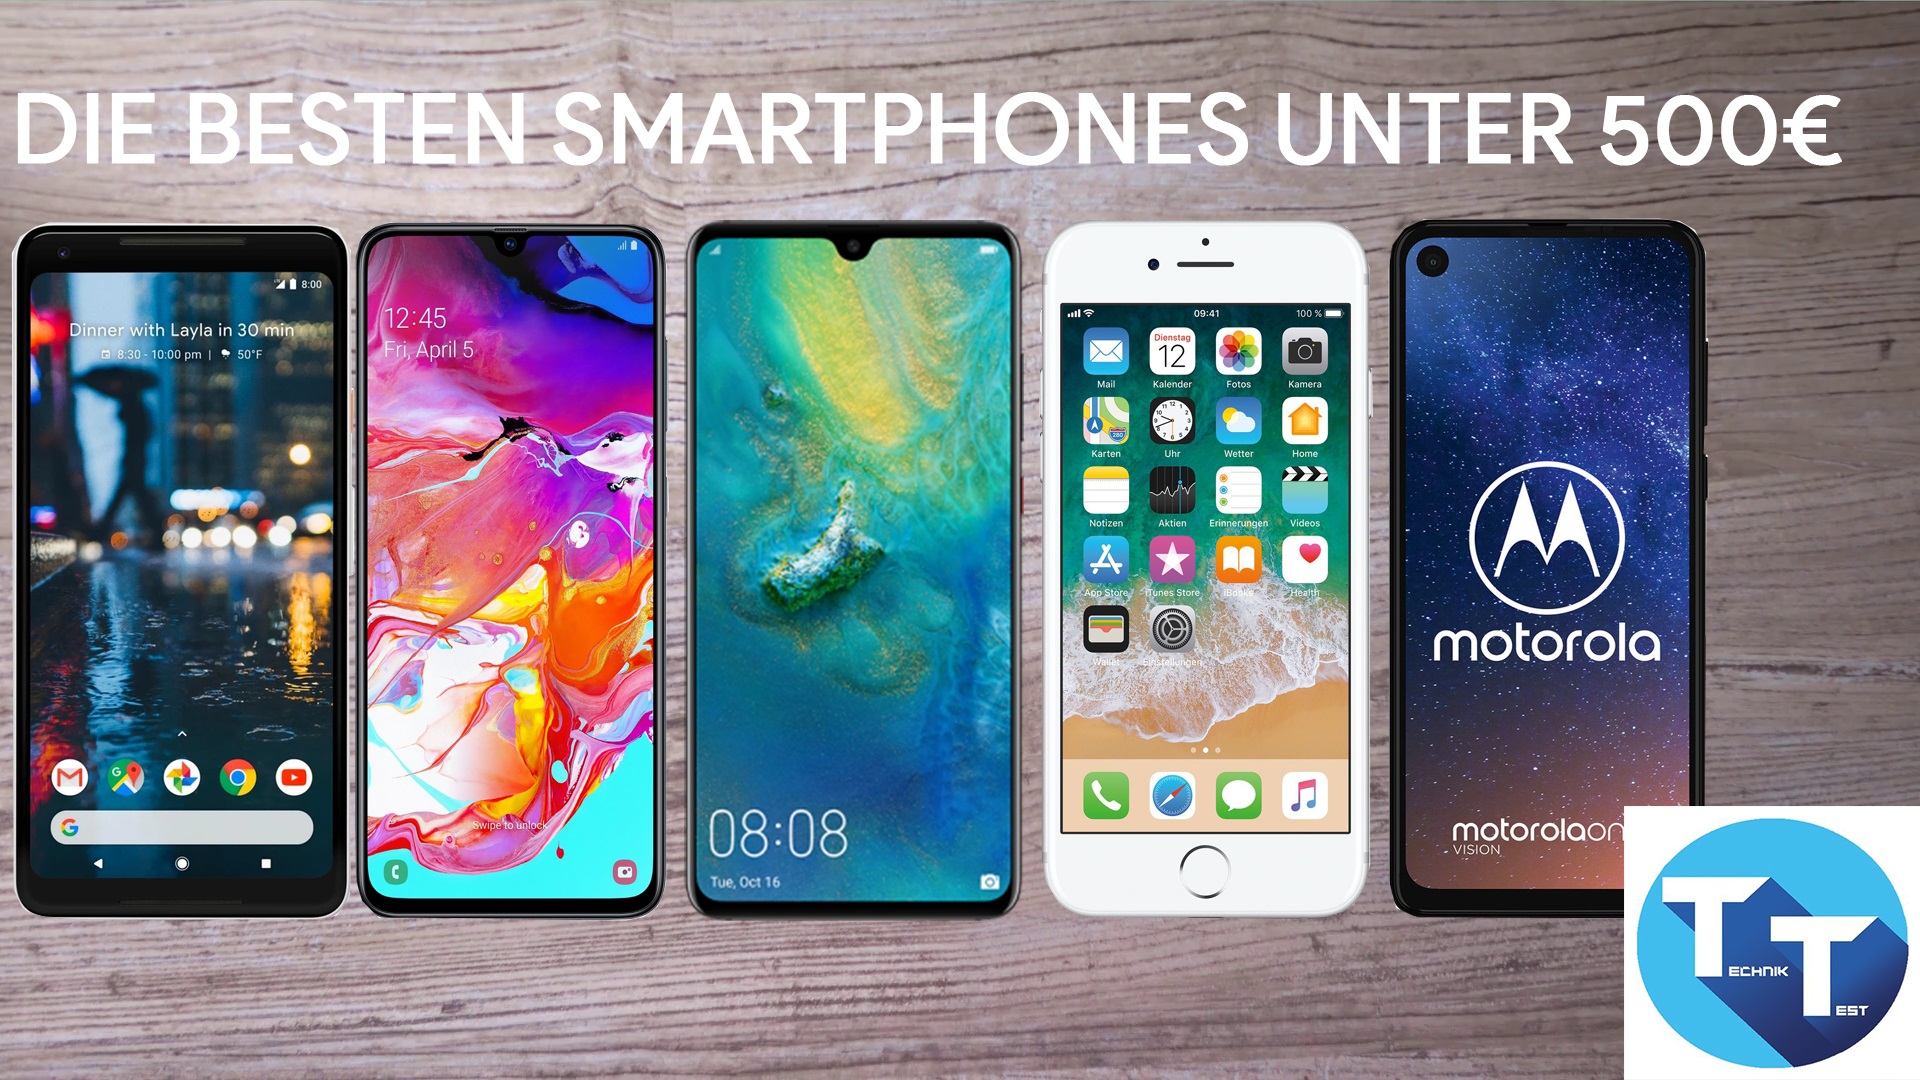 Die besten Smartphones unter 500 Euro (2019) Techniktest